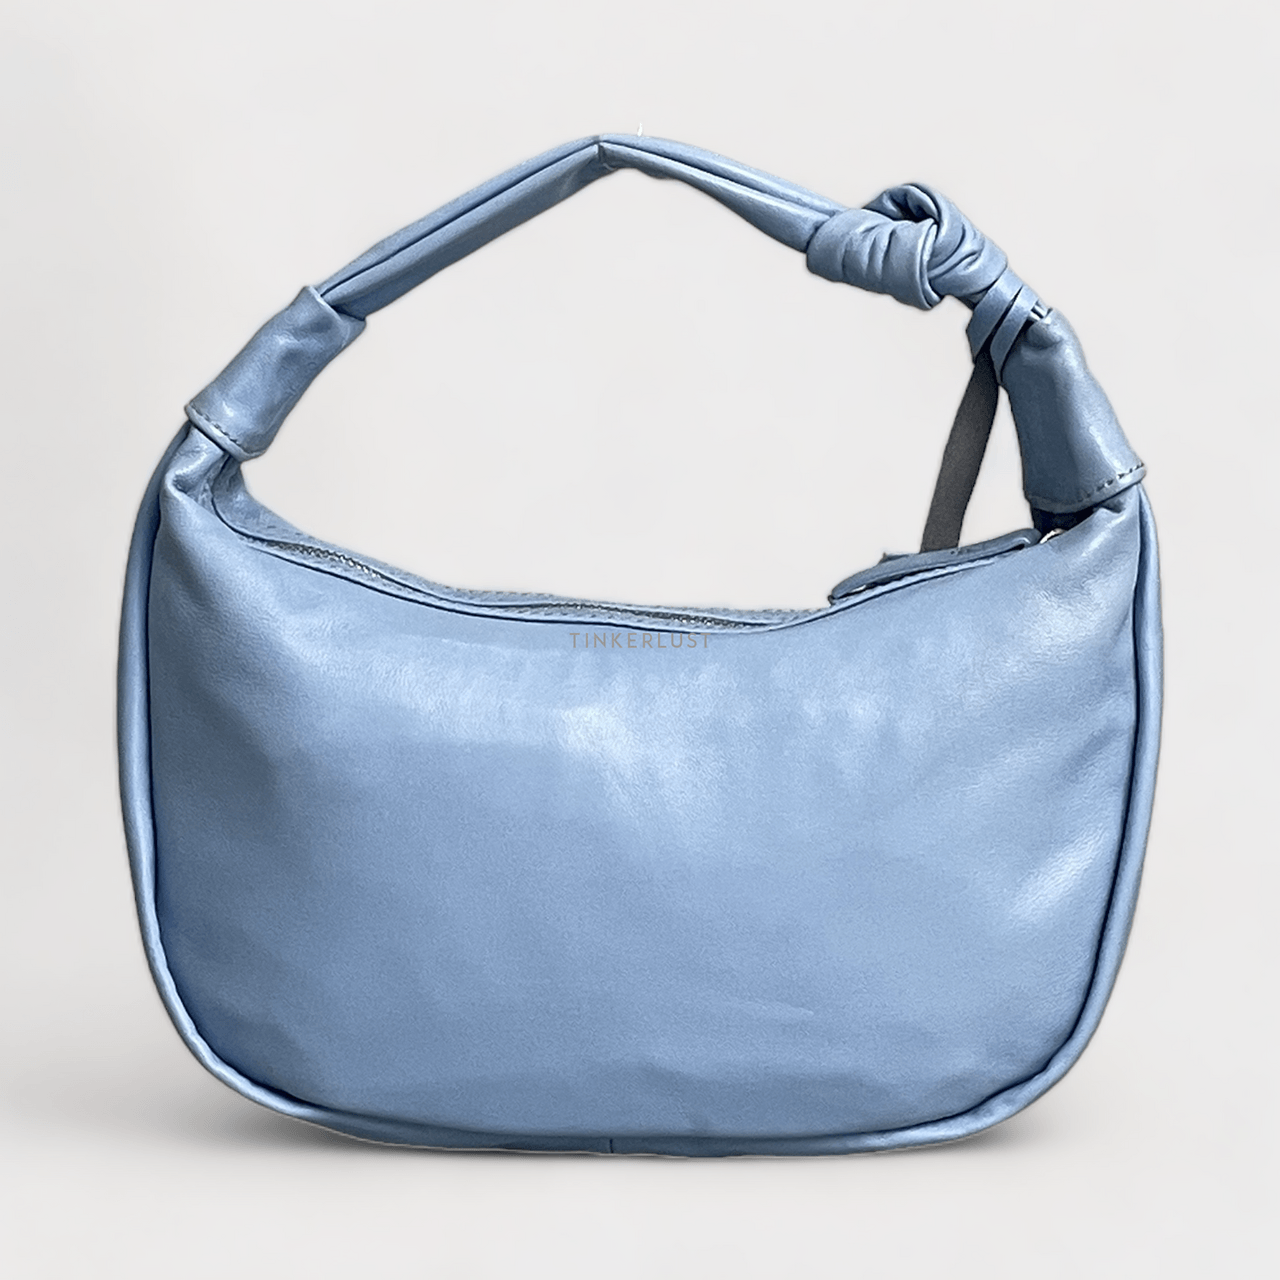 Kaynn Blue Shoulder Bag